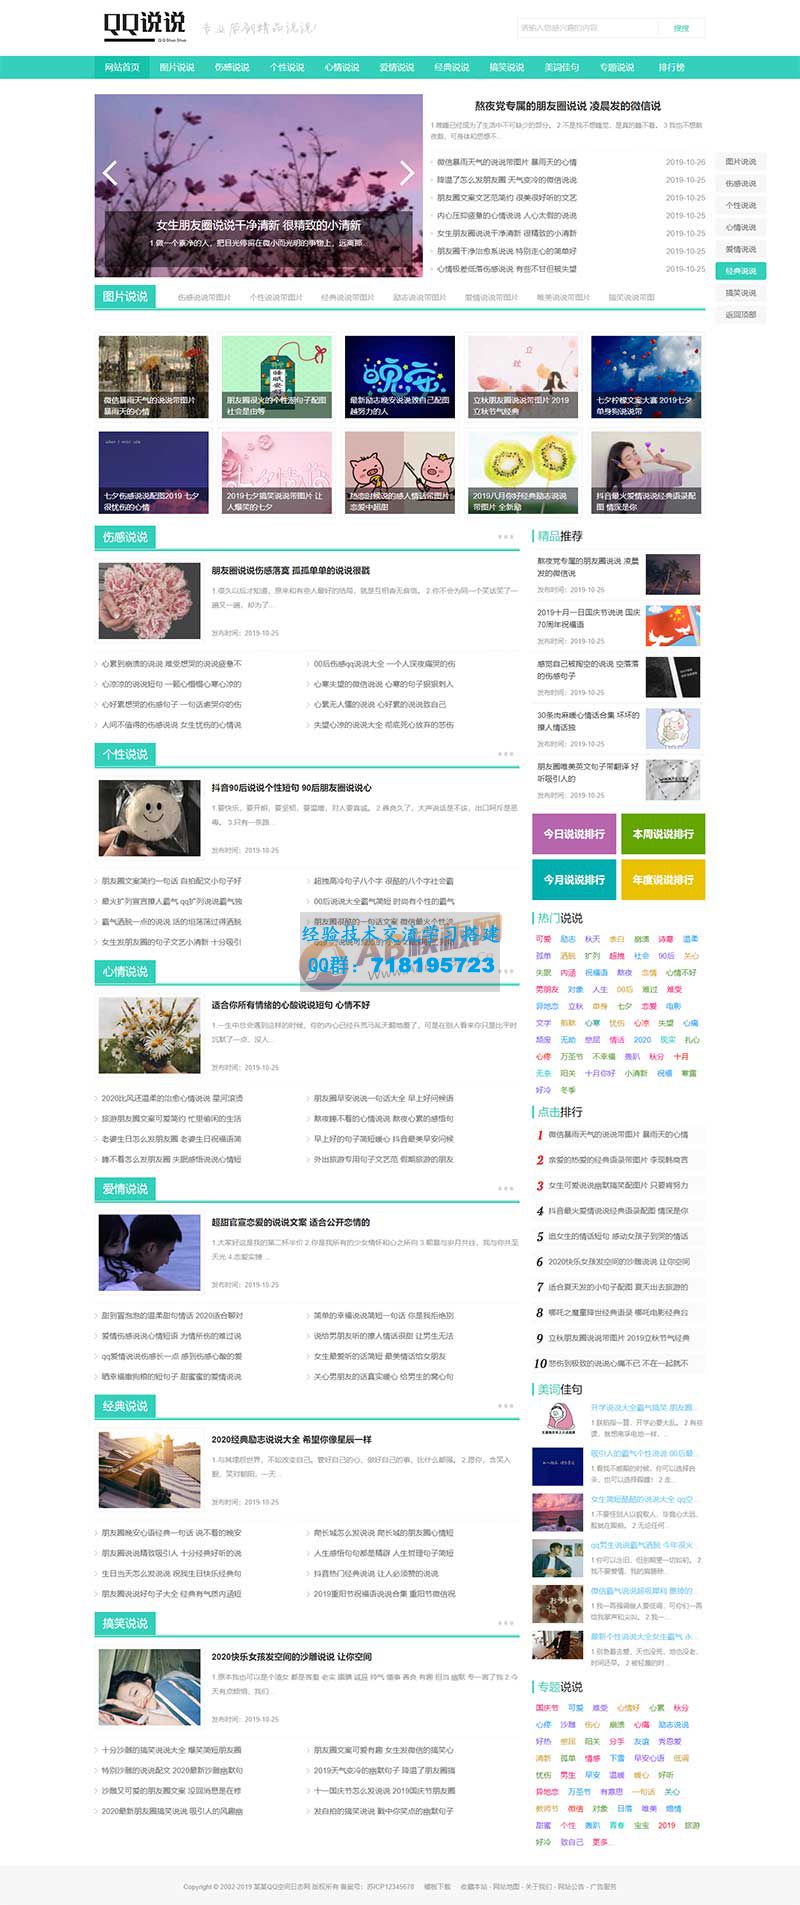     html5个人博客网站源码 PBOOTCMS自媒体运营培训教程类网站模板
